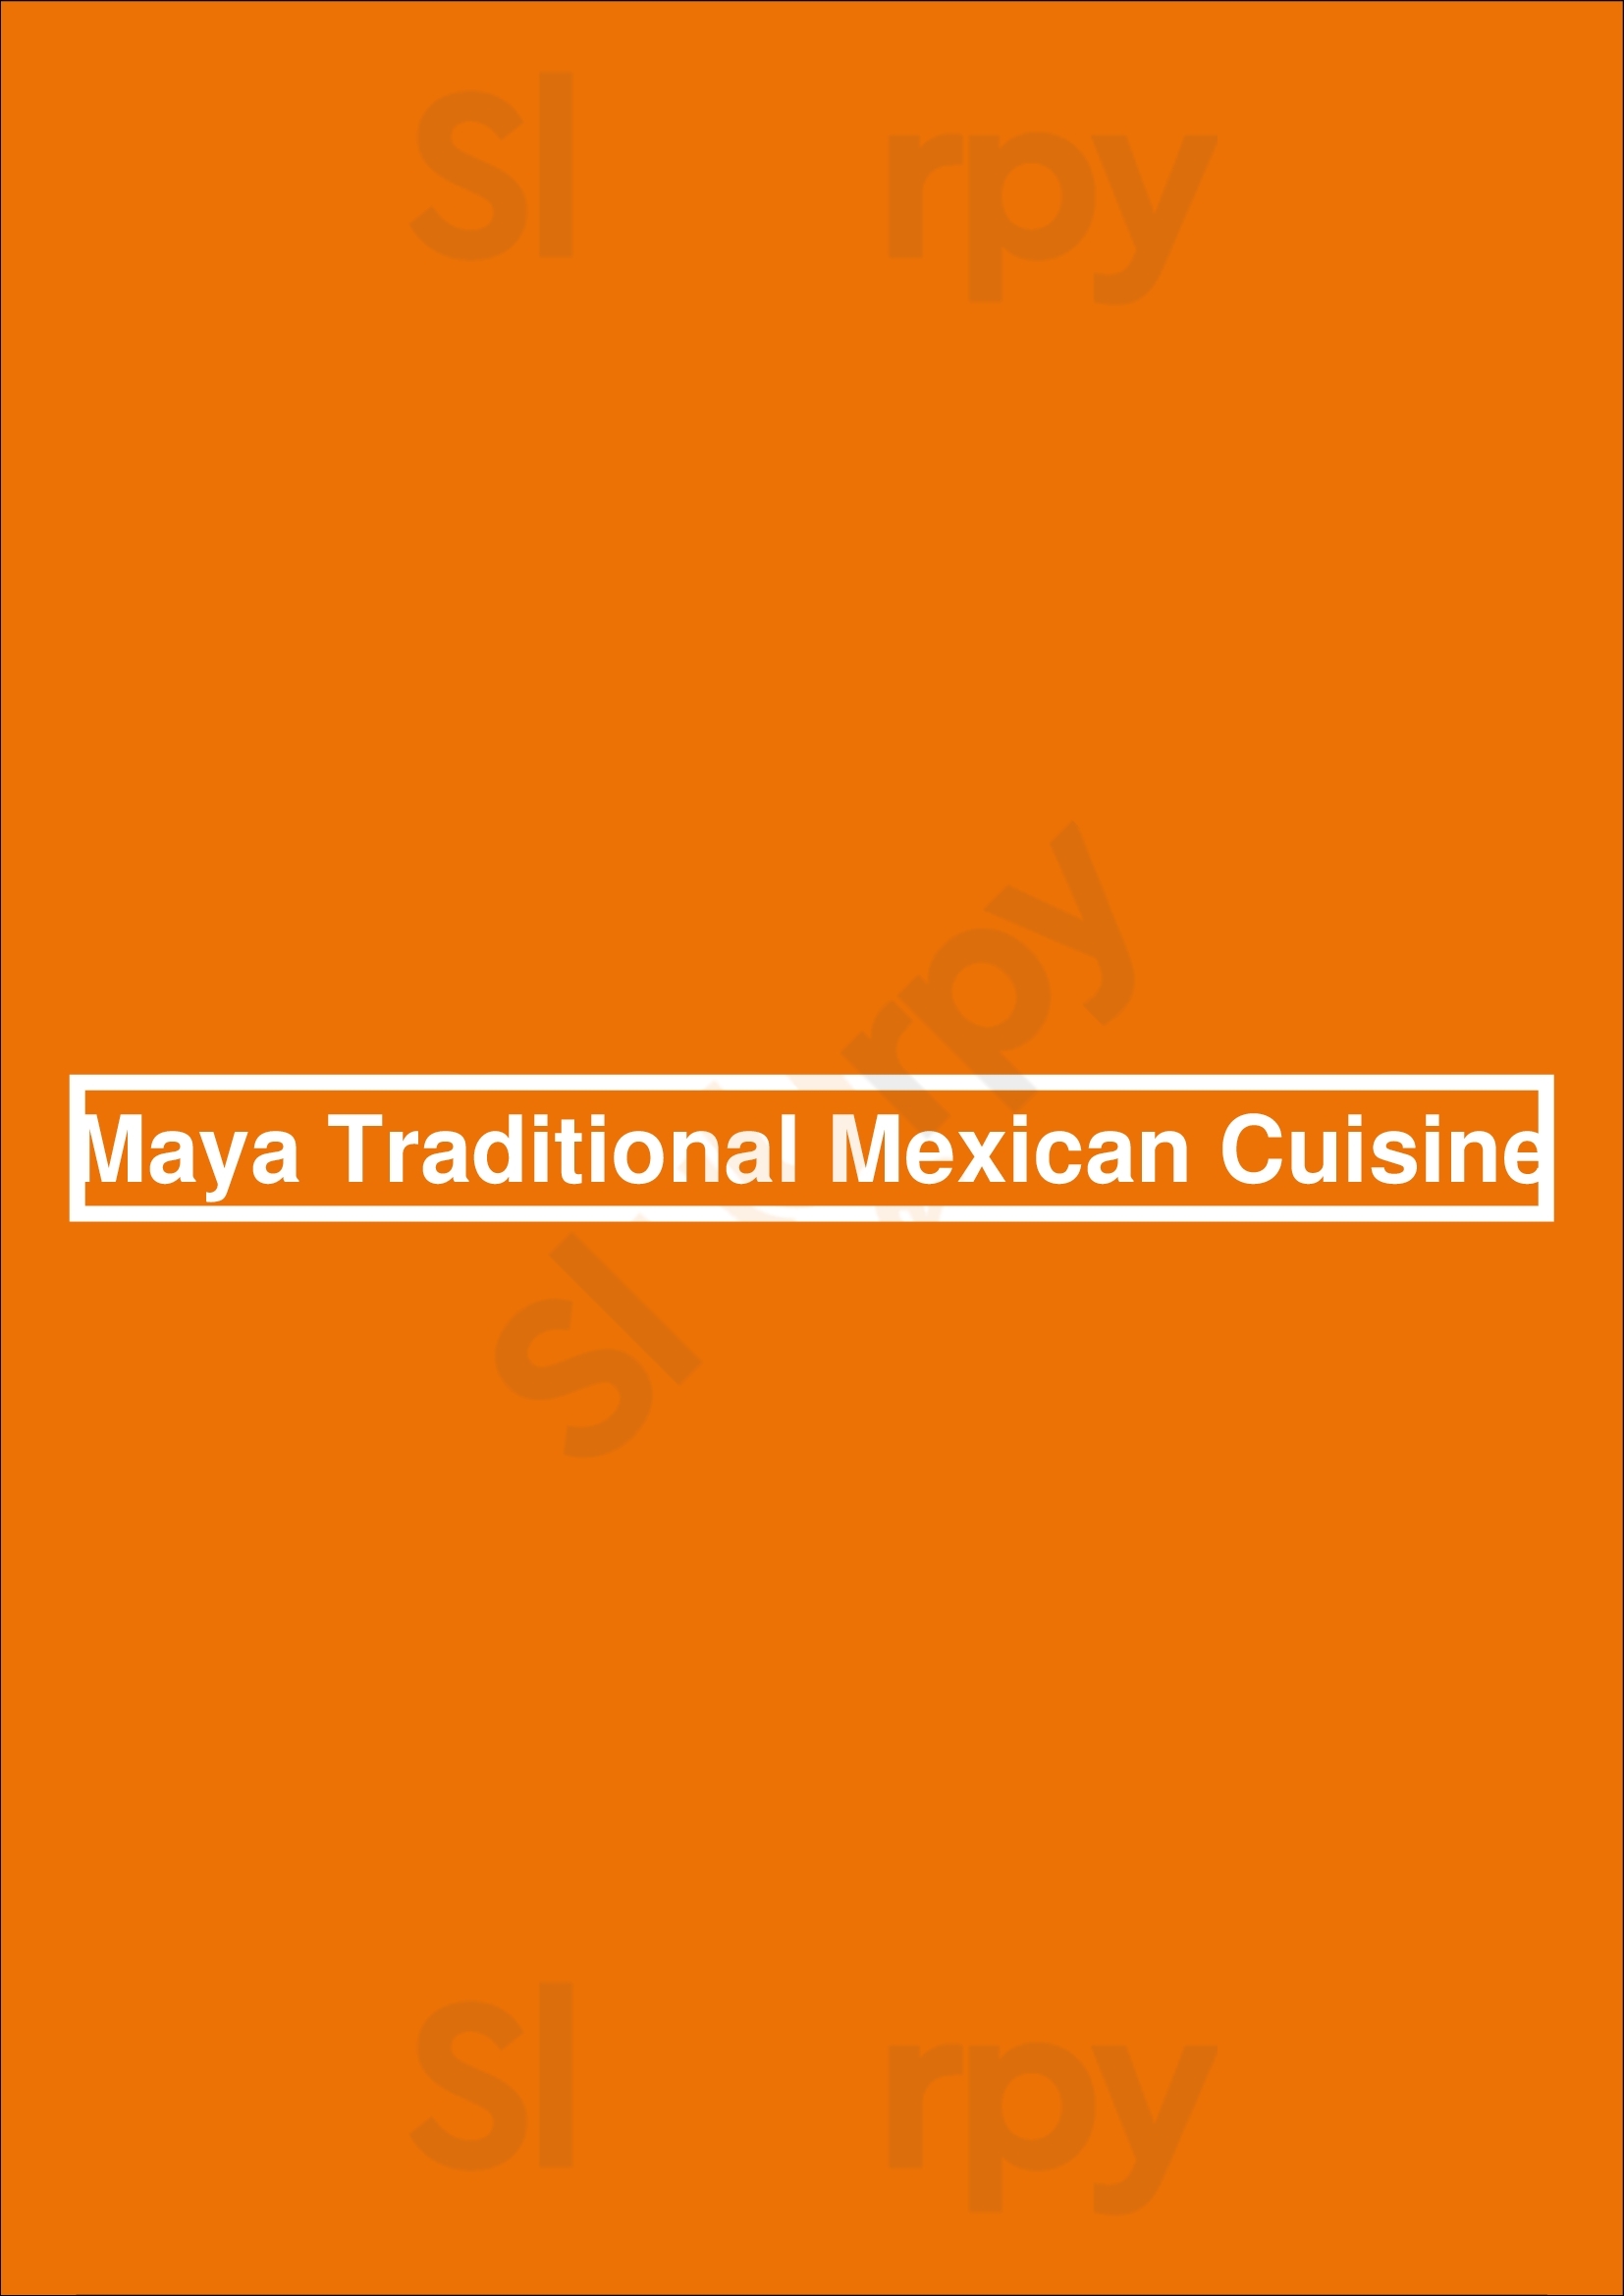 Maya Traditional Mexican Cuisine Sacramento Menu - 1